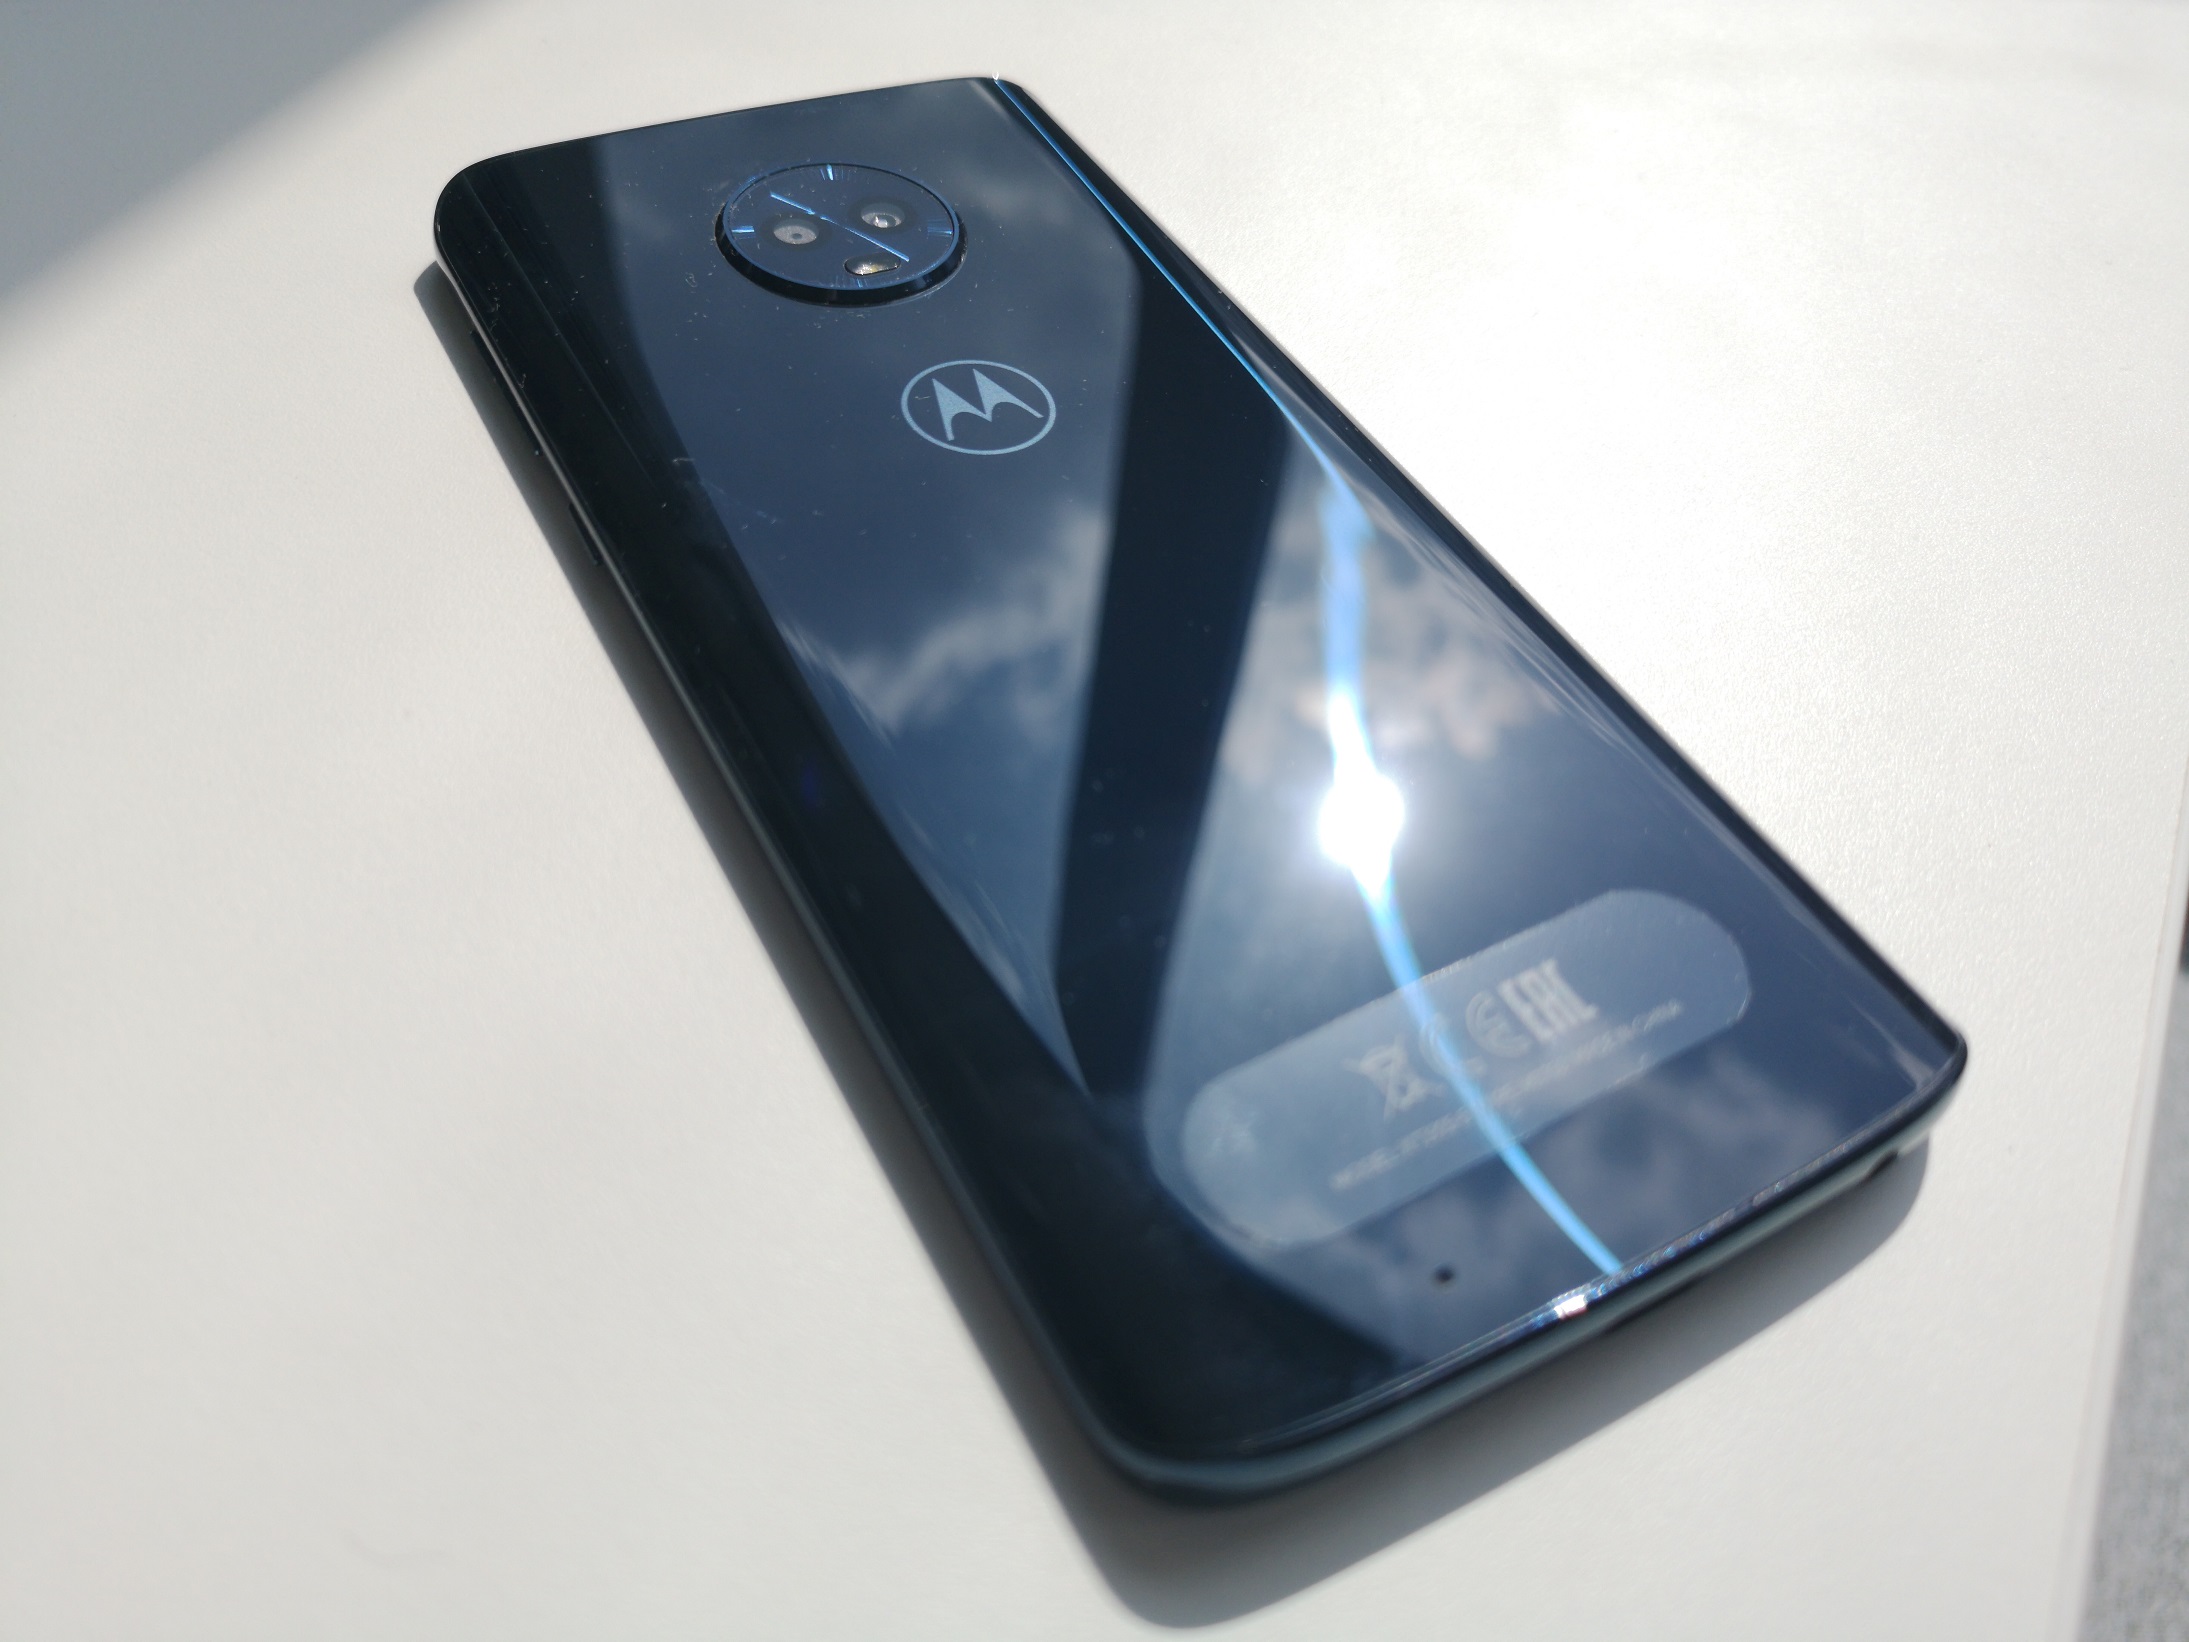 Motorola Moto G6